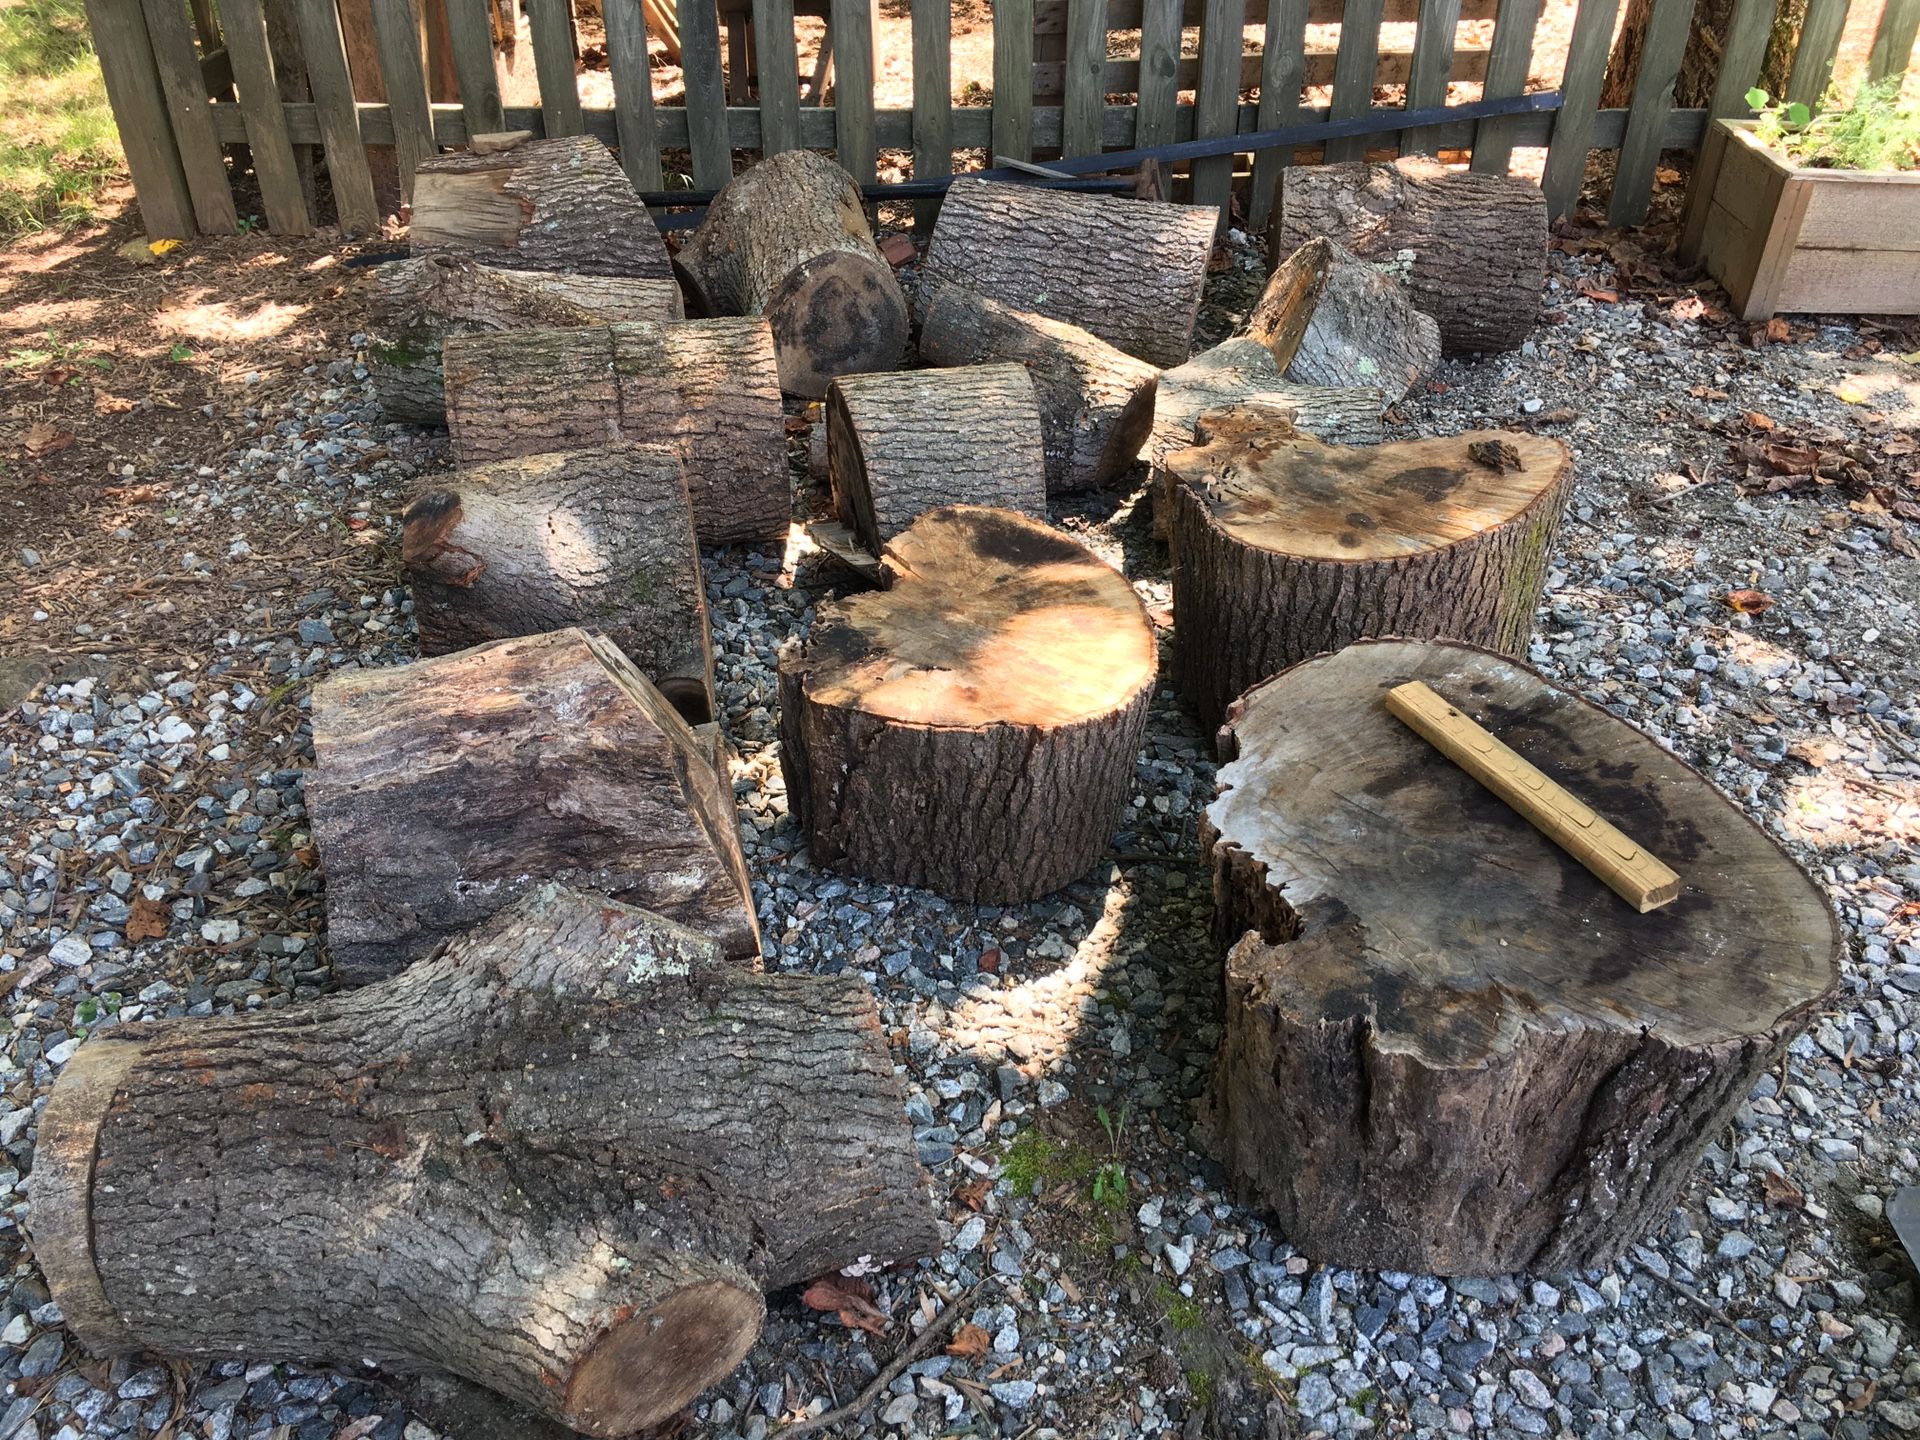 Free firewood